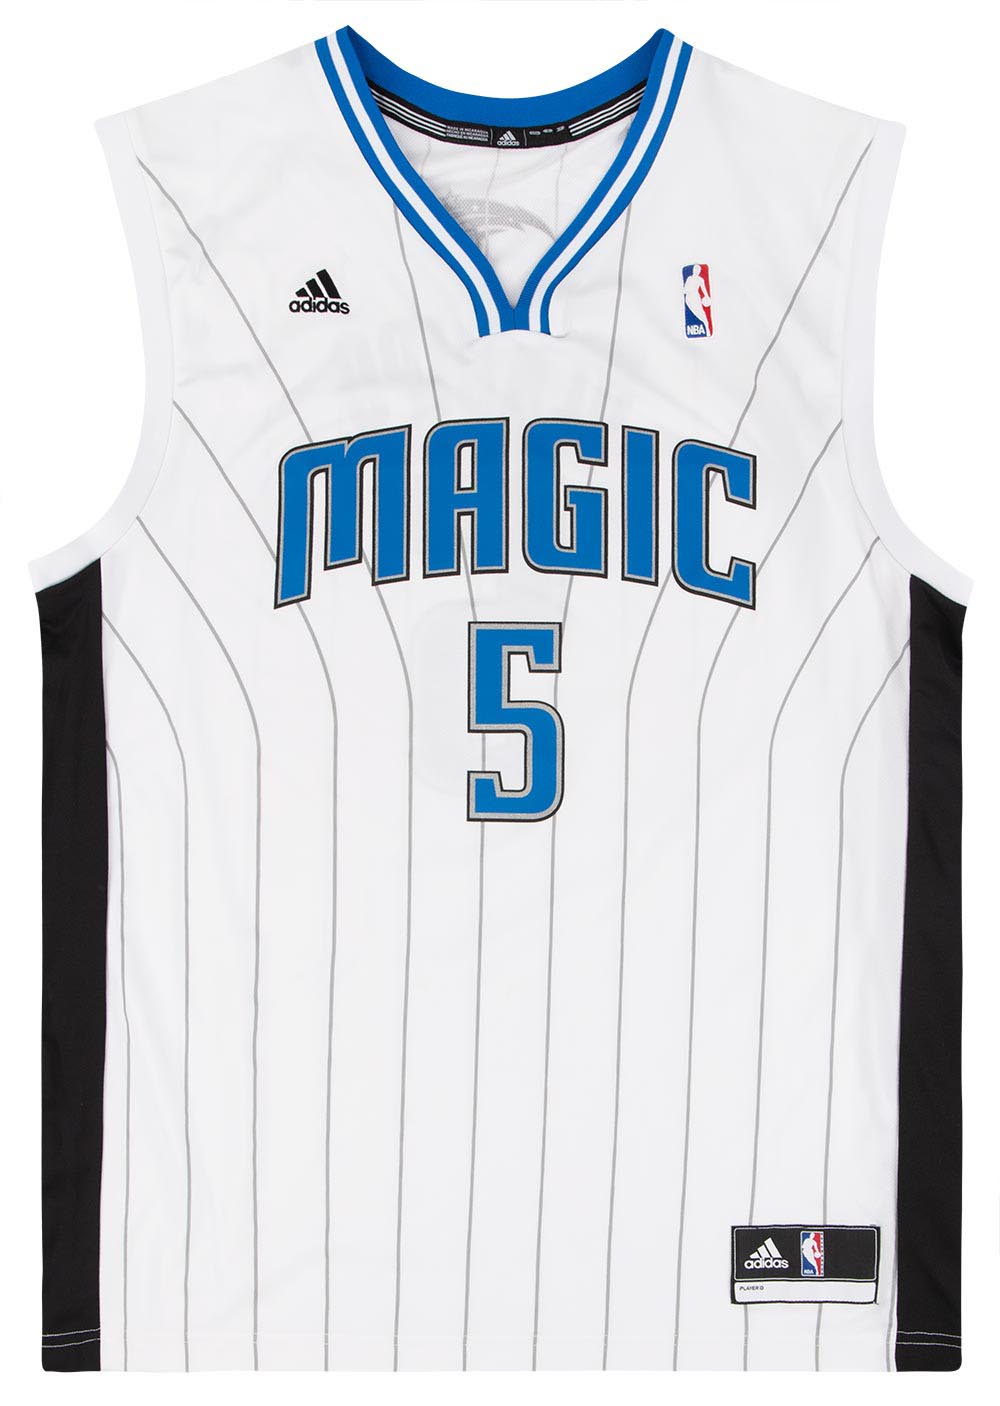 Orlando Magic Home Uniform  Orlando magic, Nba uniforms, Orlando